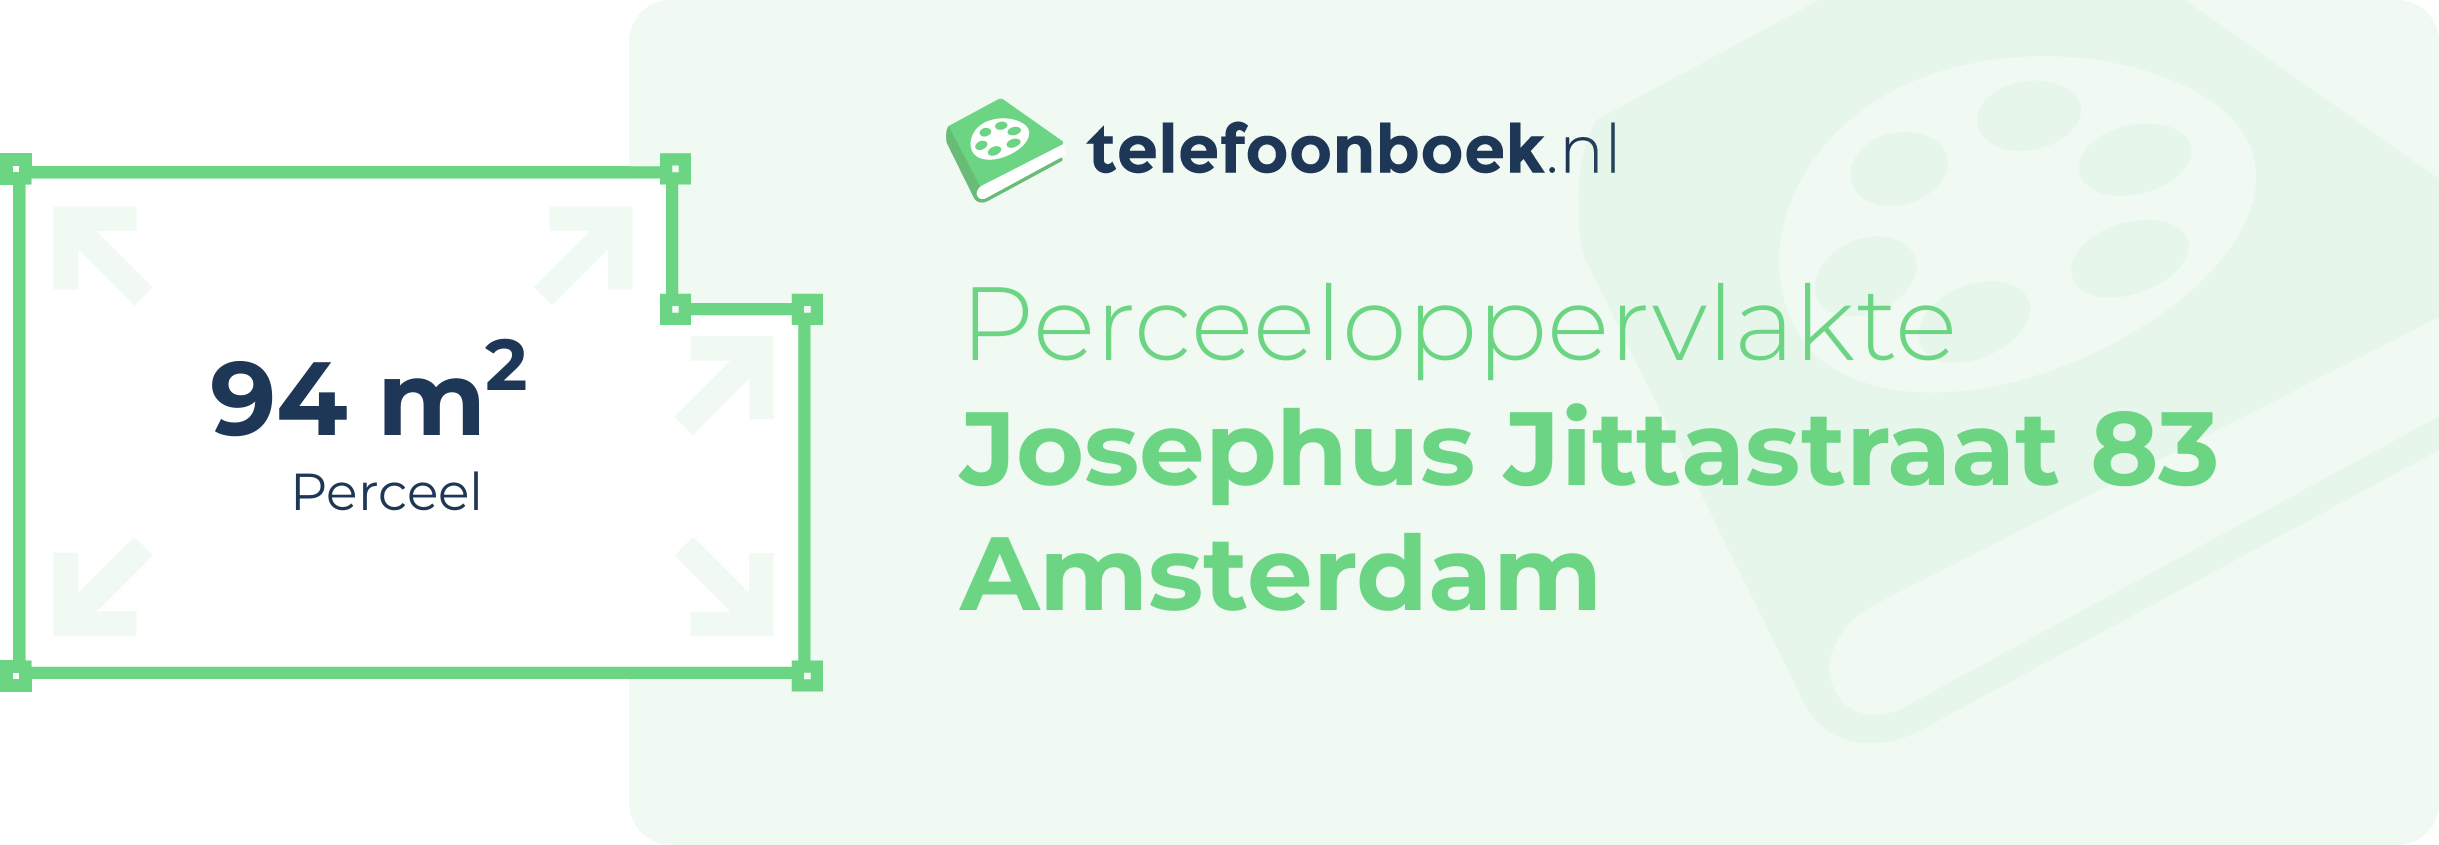 Perceeloppervlakte Josephus Jittastraat 83 Amsterdam